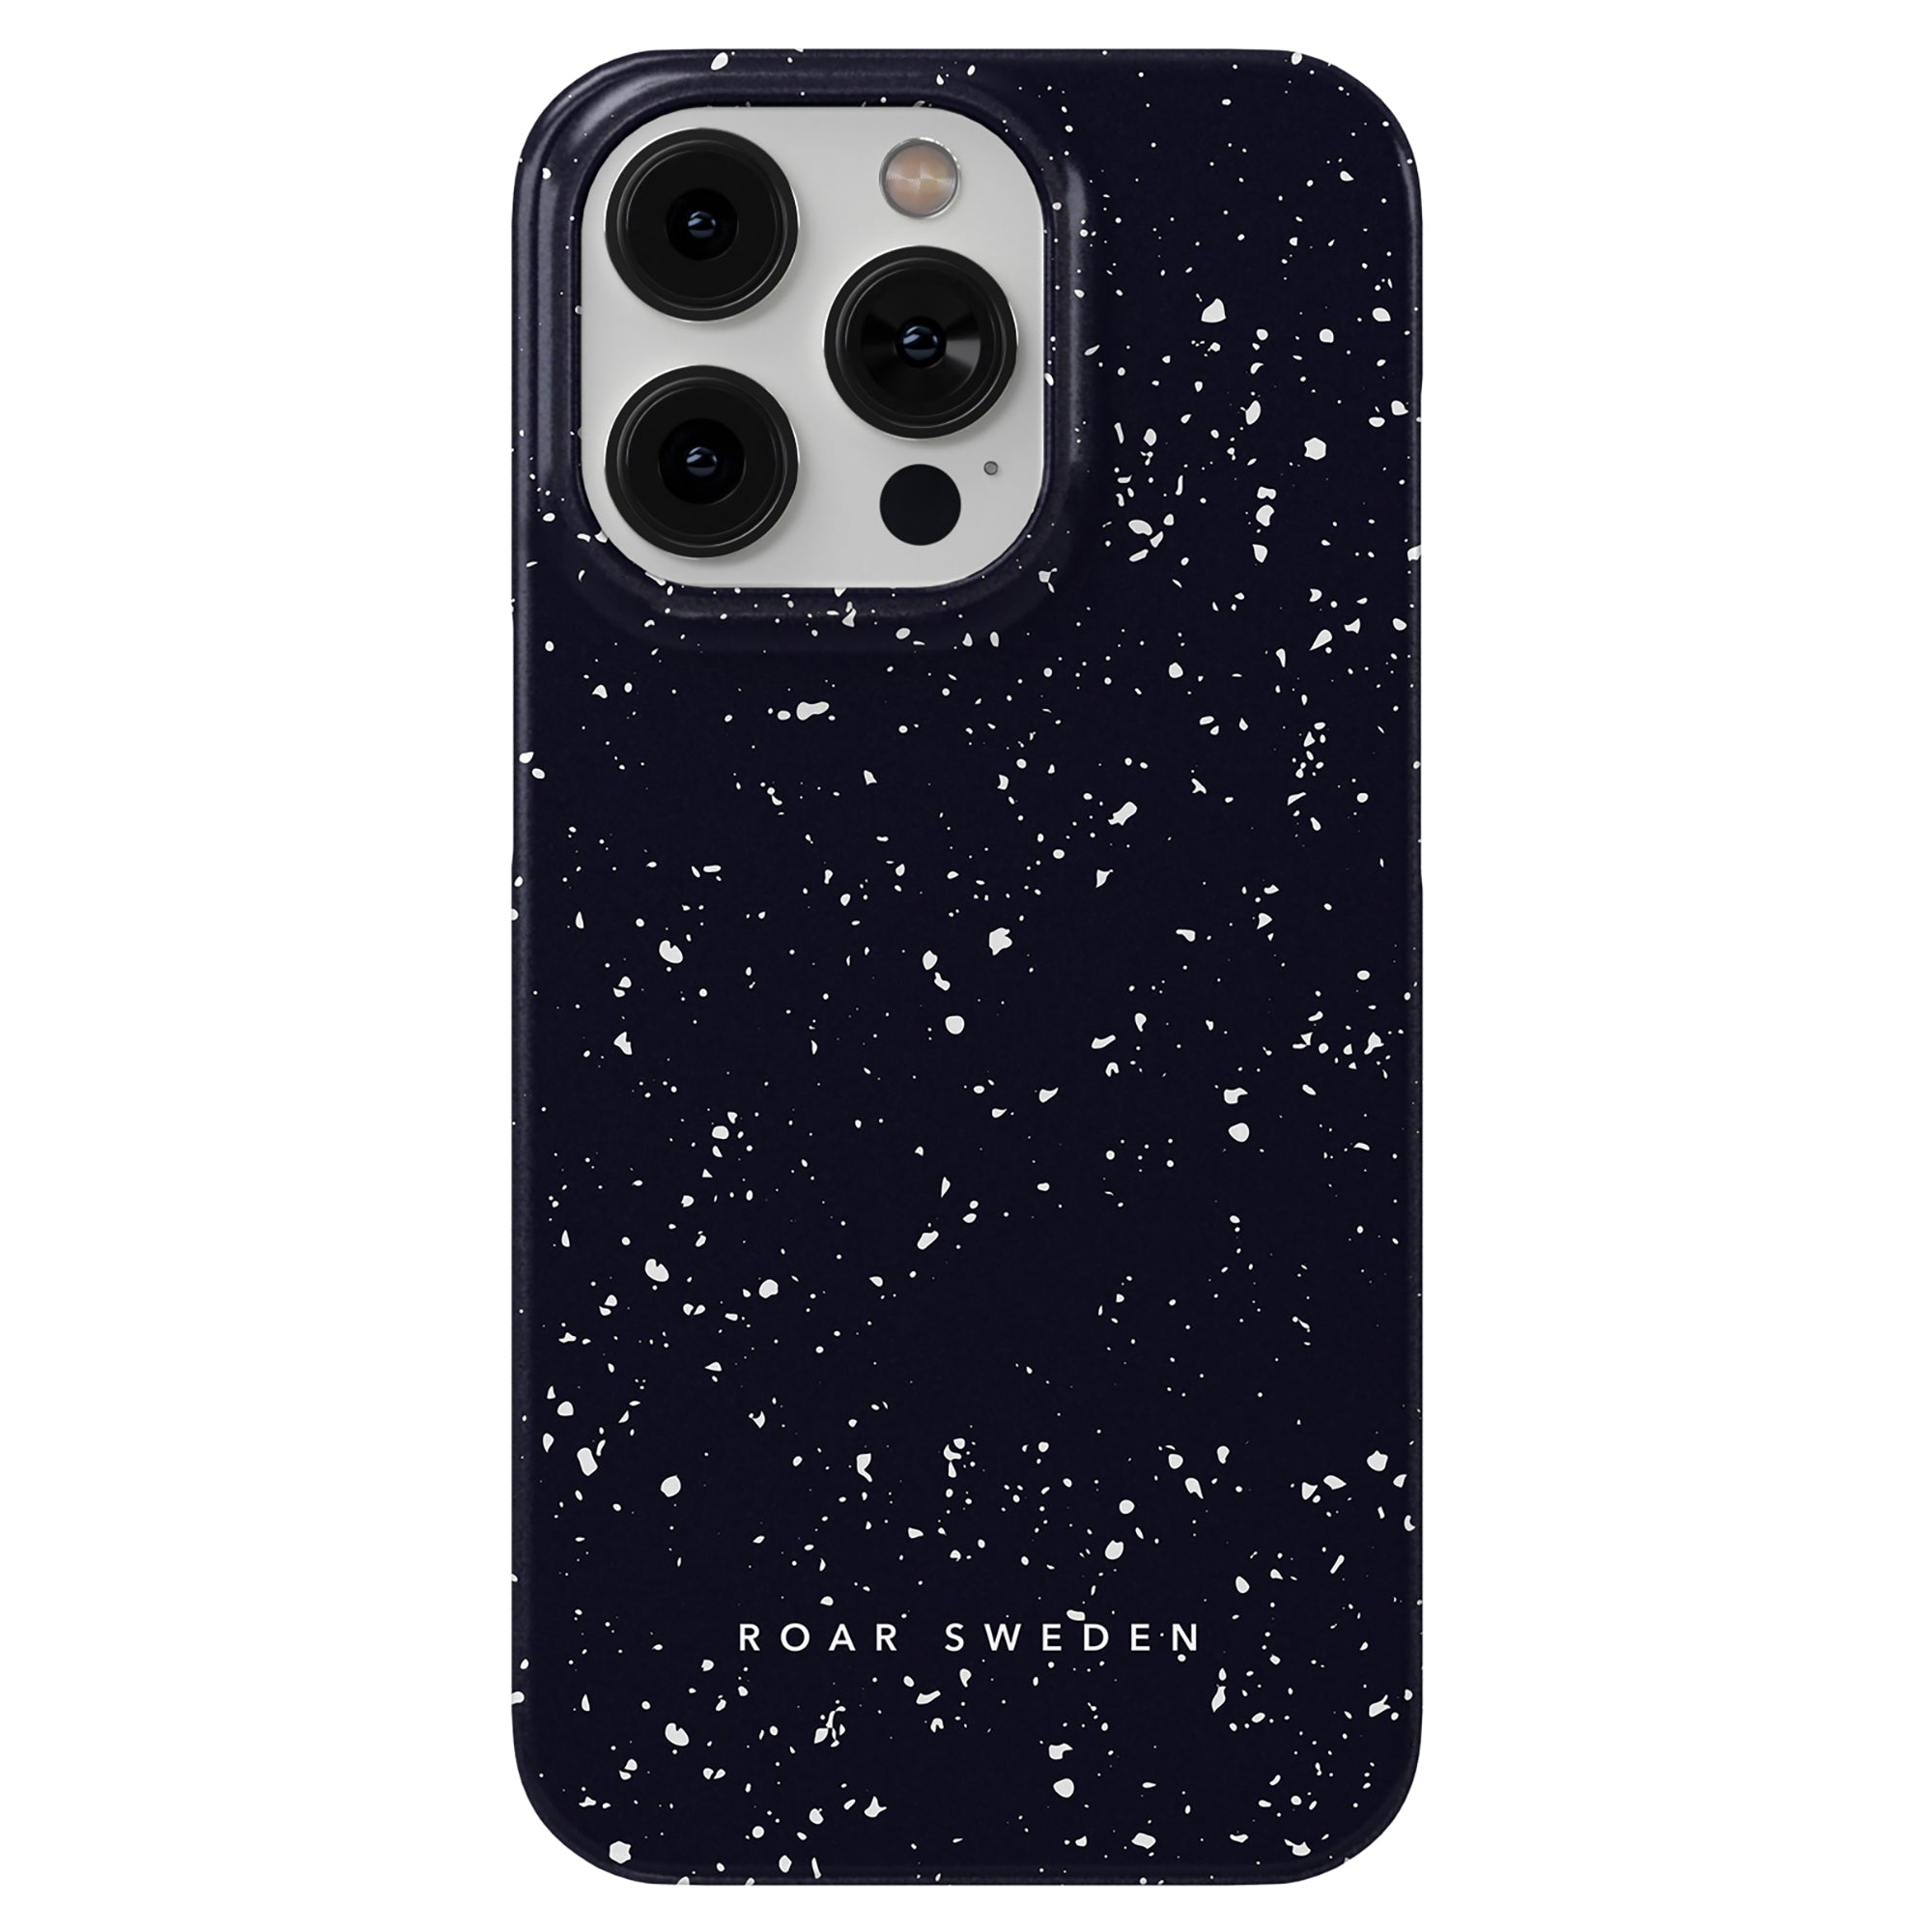 A night stars slim phone case with triple camera cutouts, branded "roar sweden.